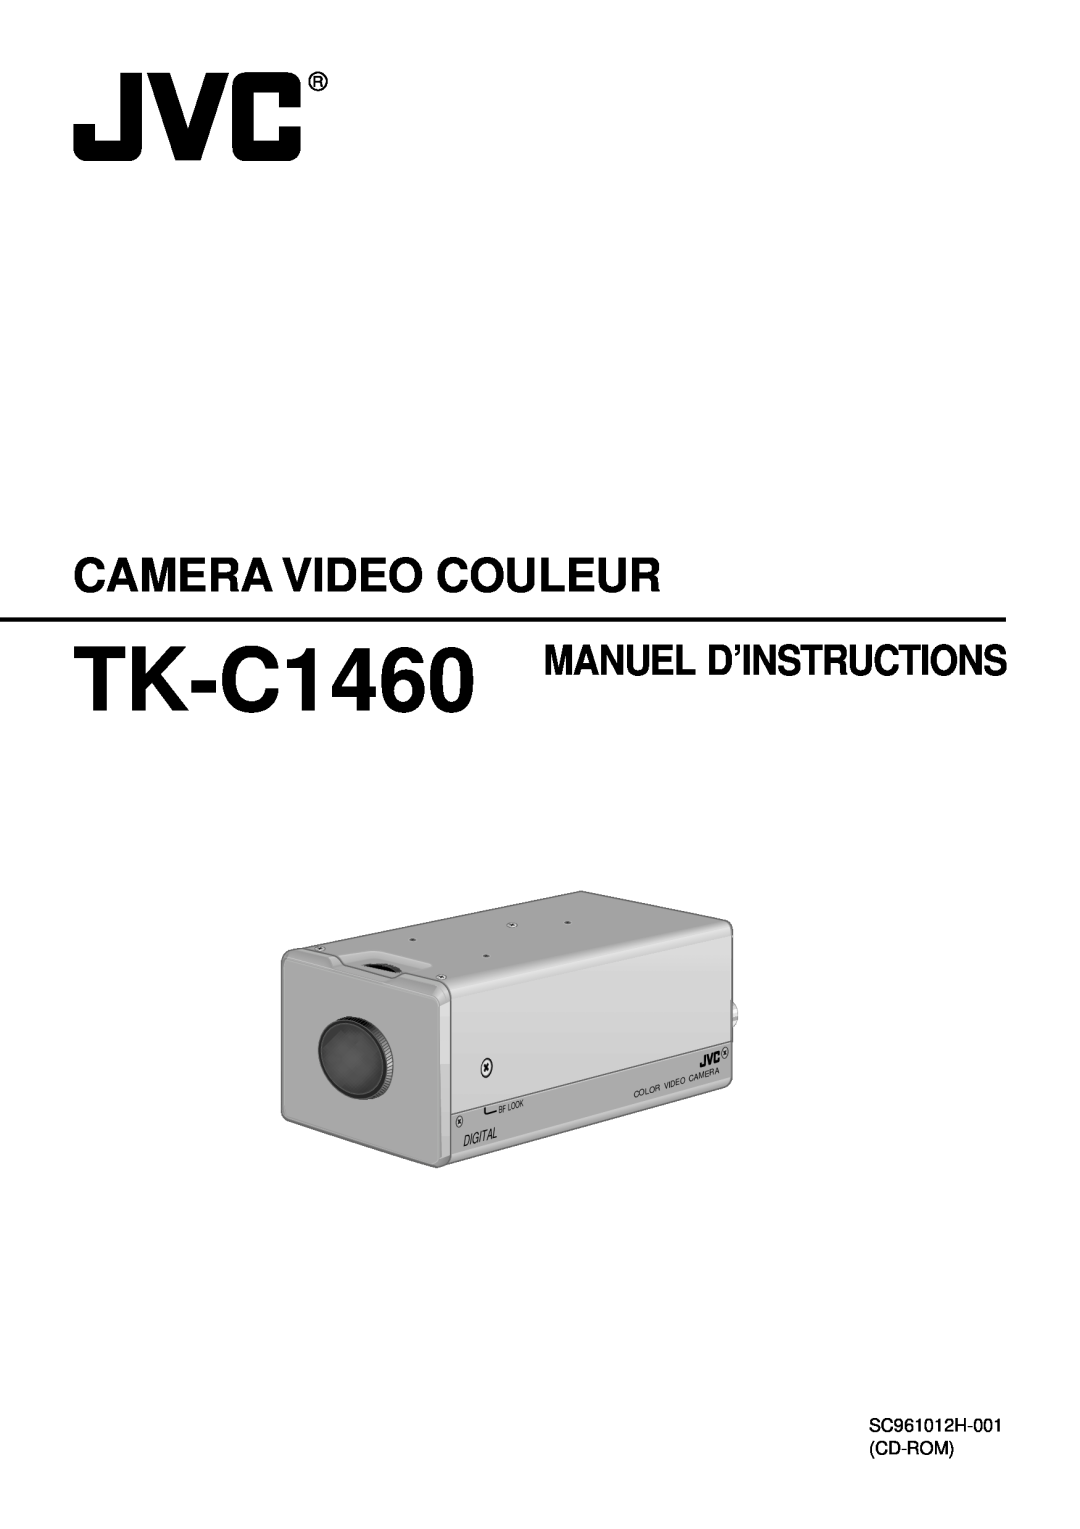 JVC manual CAMERA VIDEO COULEUR TK-C1460 MANUEL D’INSTRUCTIONS, SC961012H-001 CD-ROM, Digital, Video, Look 